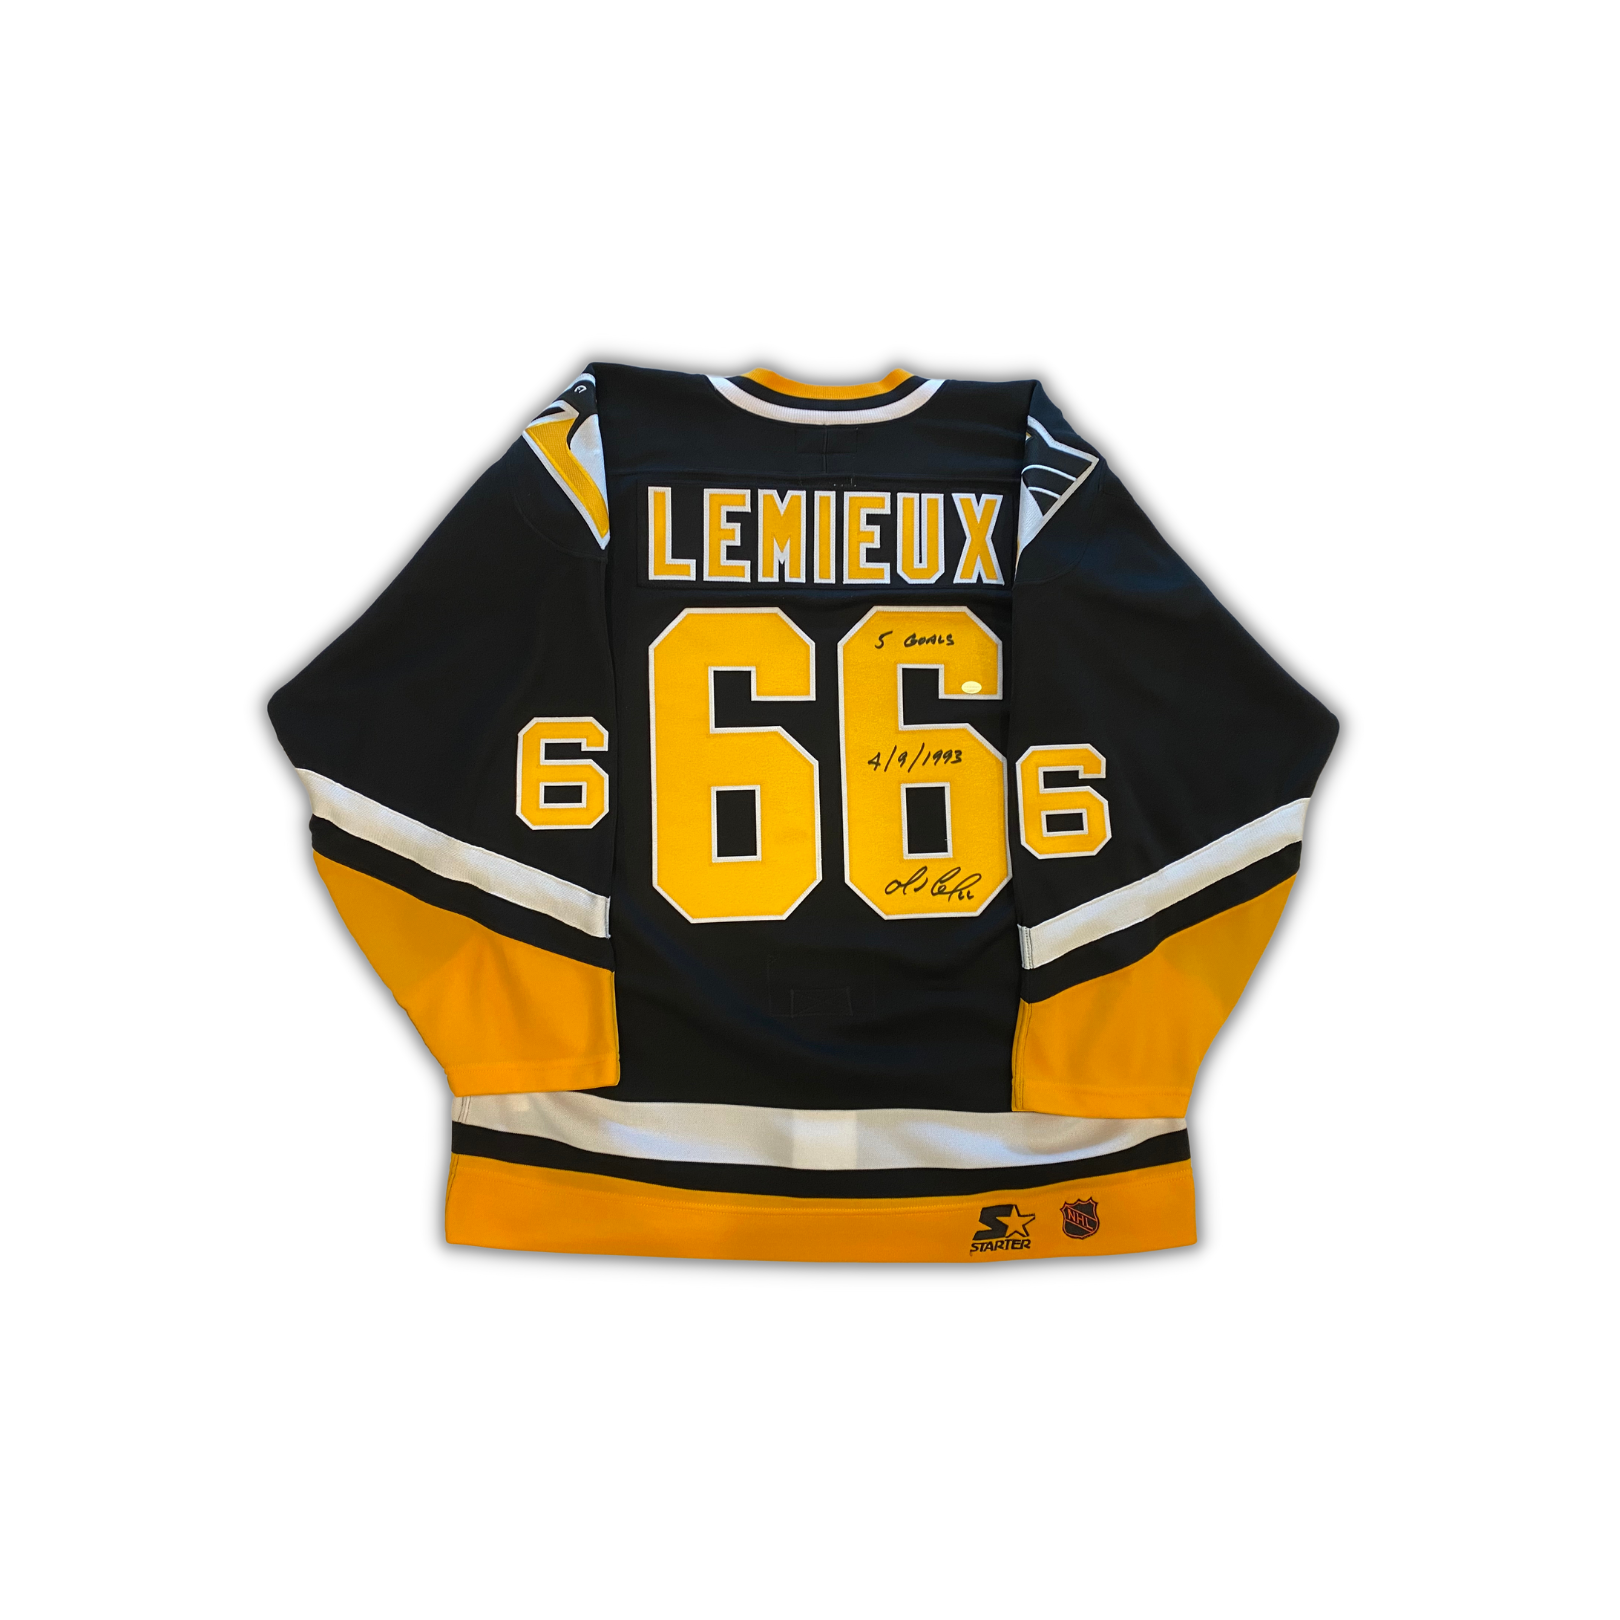 Mario Lemieux - A Lemieux signed 2001 NHL All Star jersey